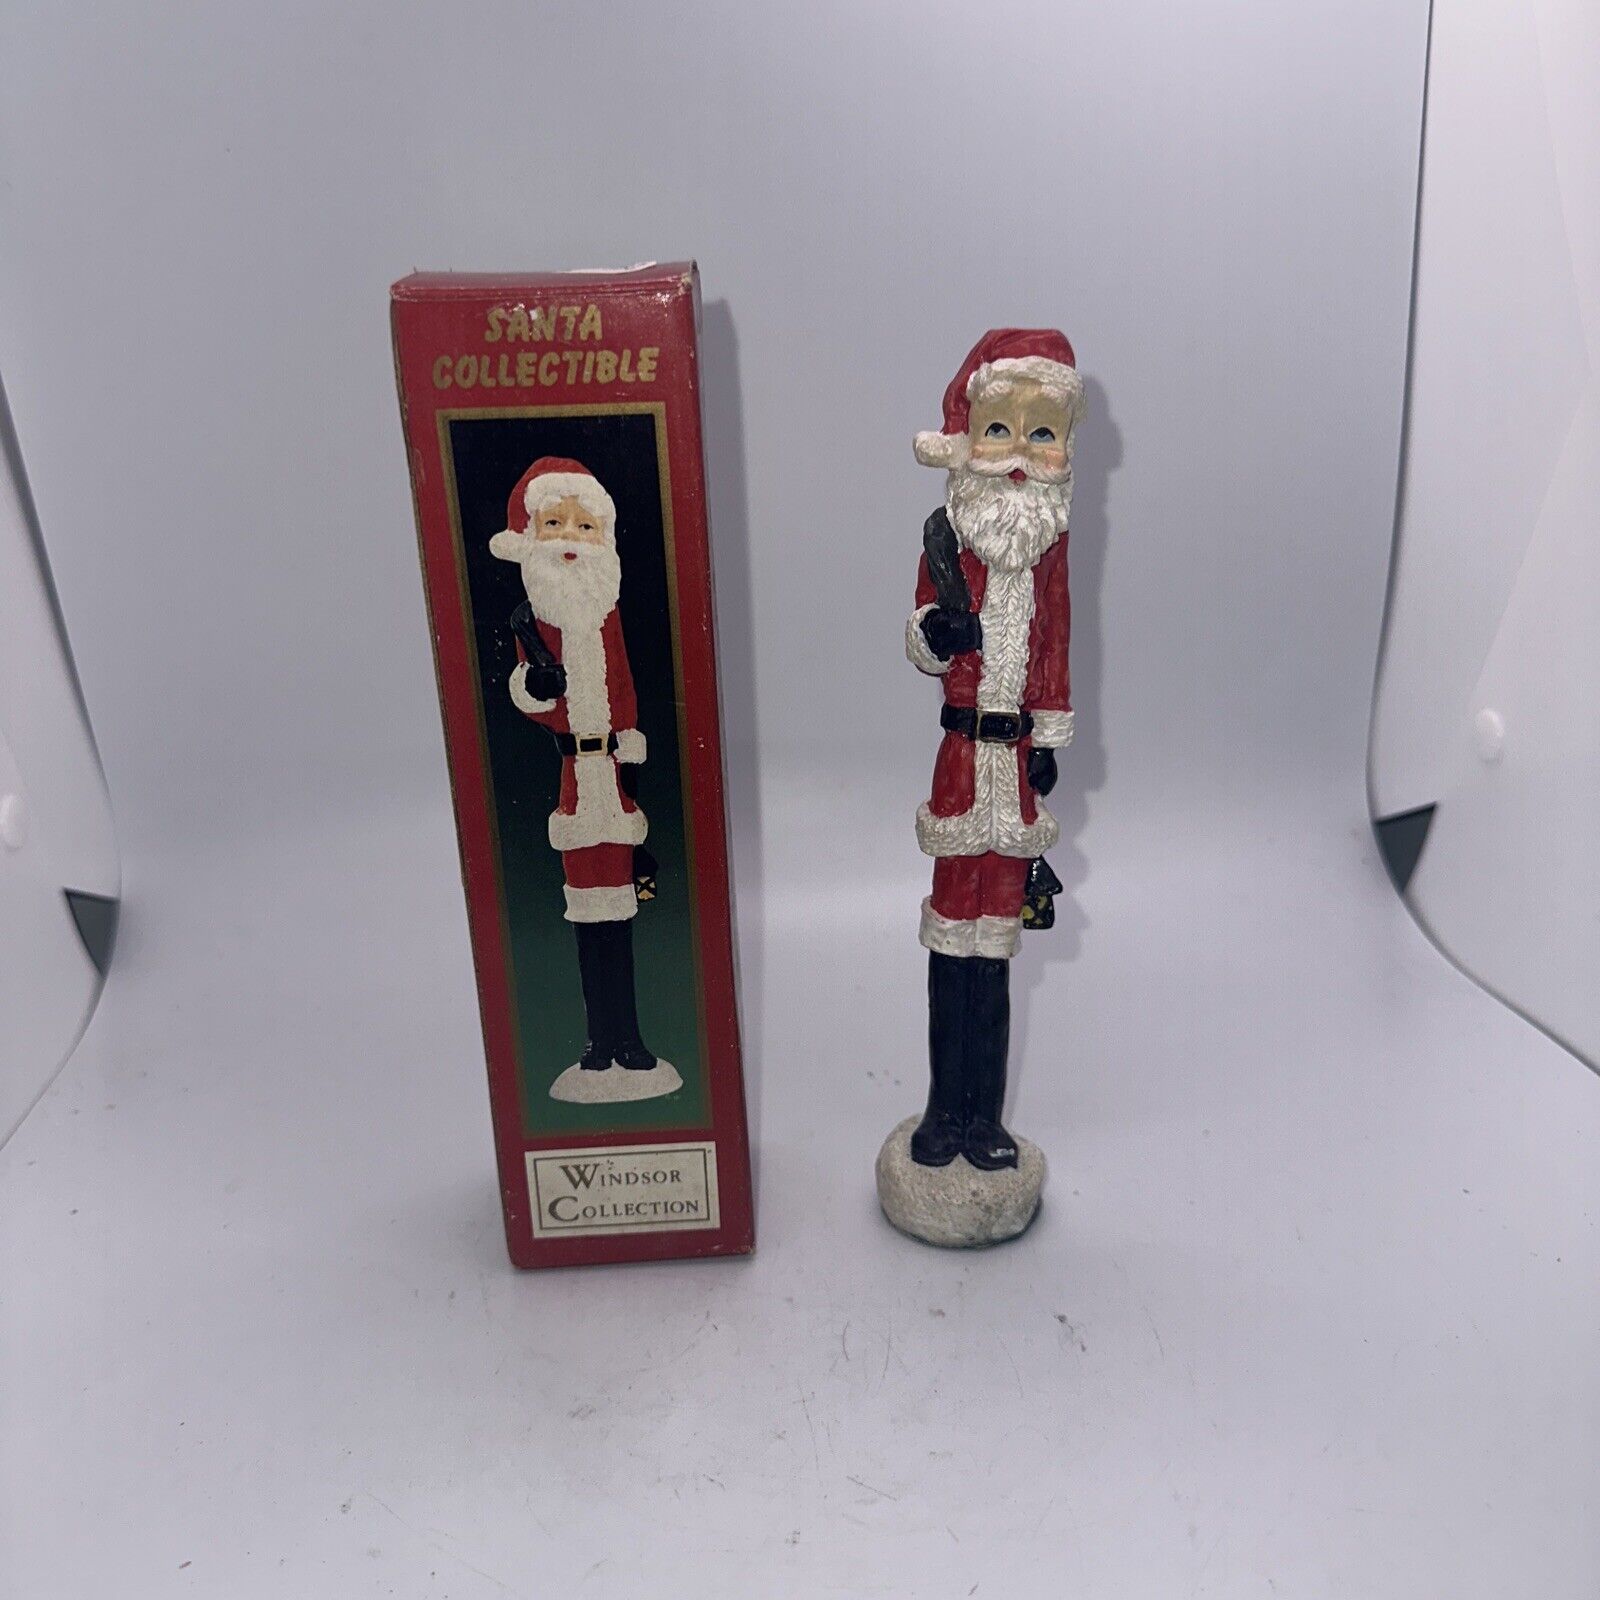 Windsor Collection - Pencil Santa Collection 1024